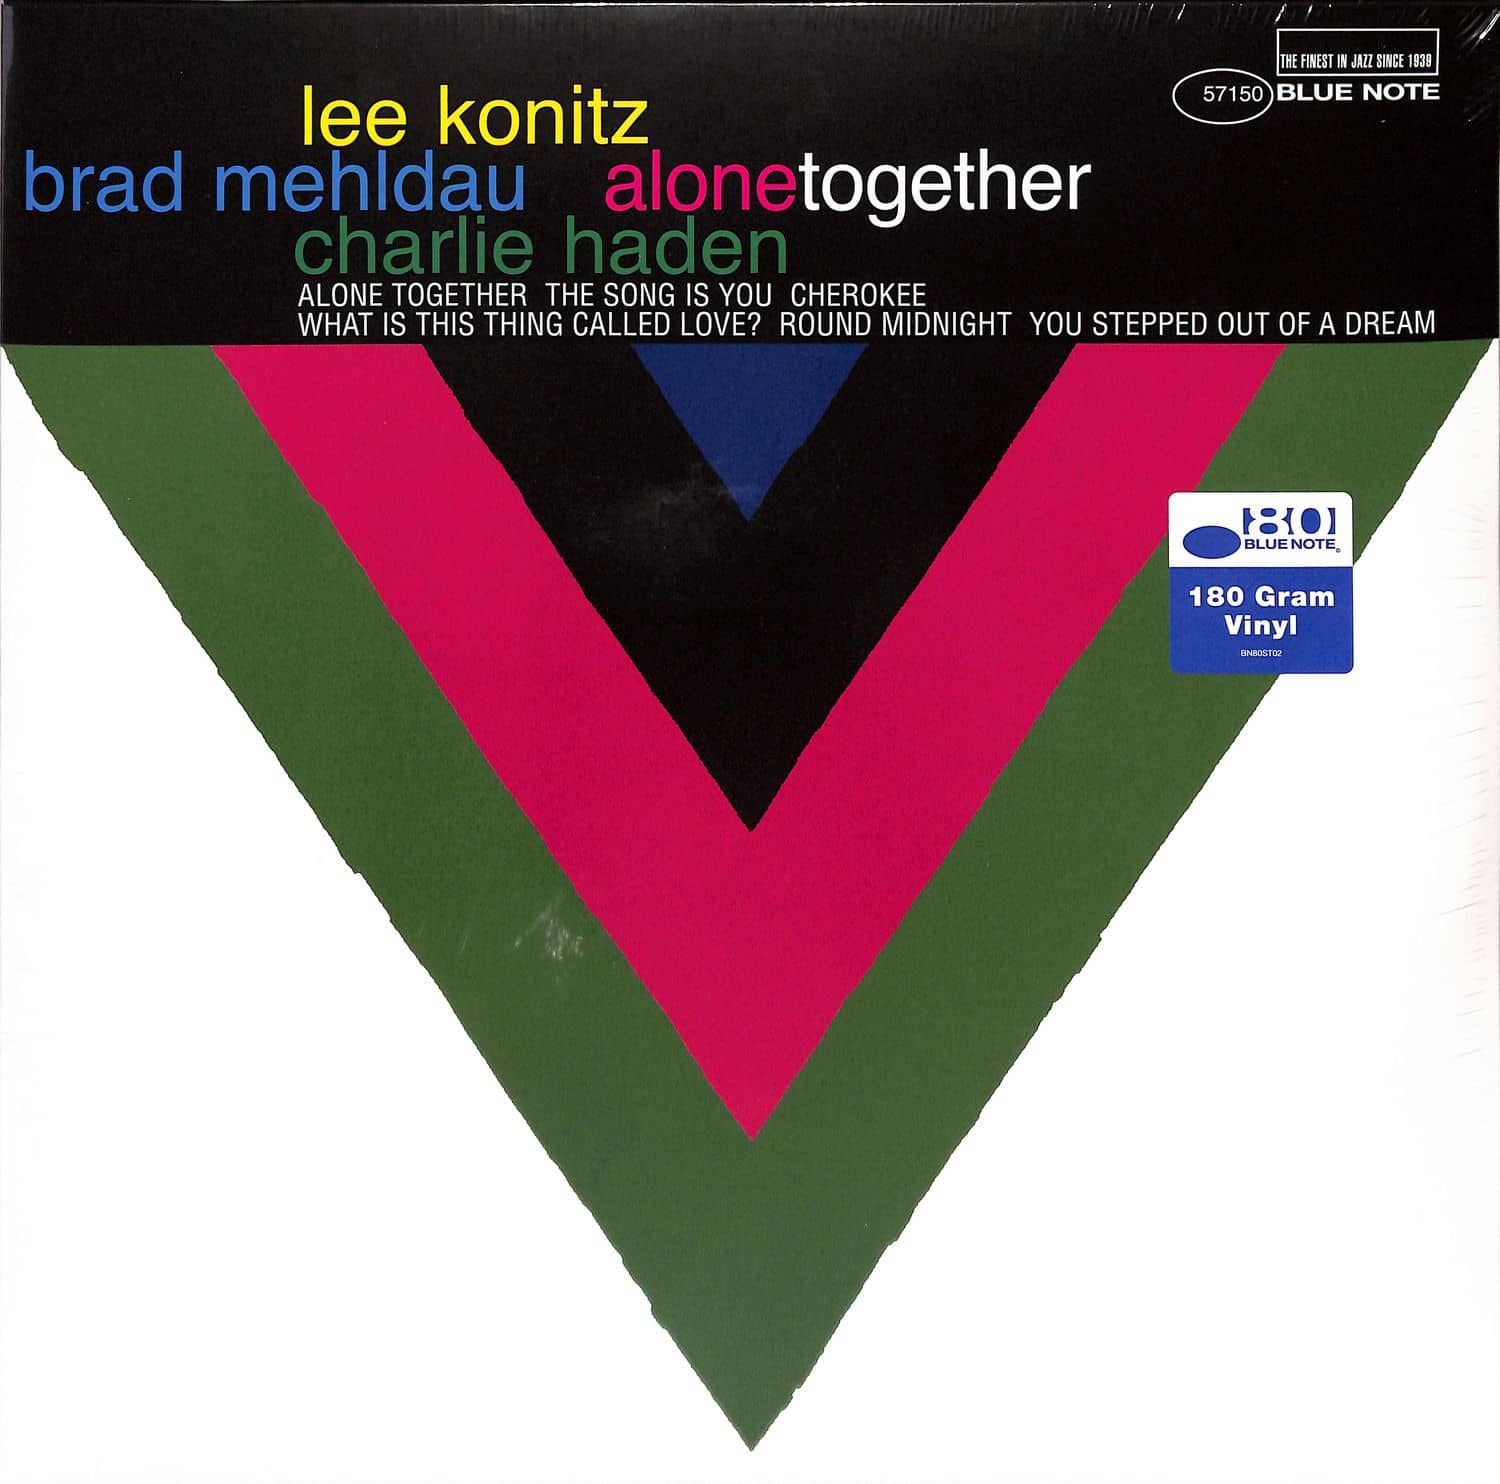 Lee Konitz - ALONE TOGETHER 